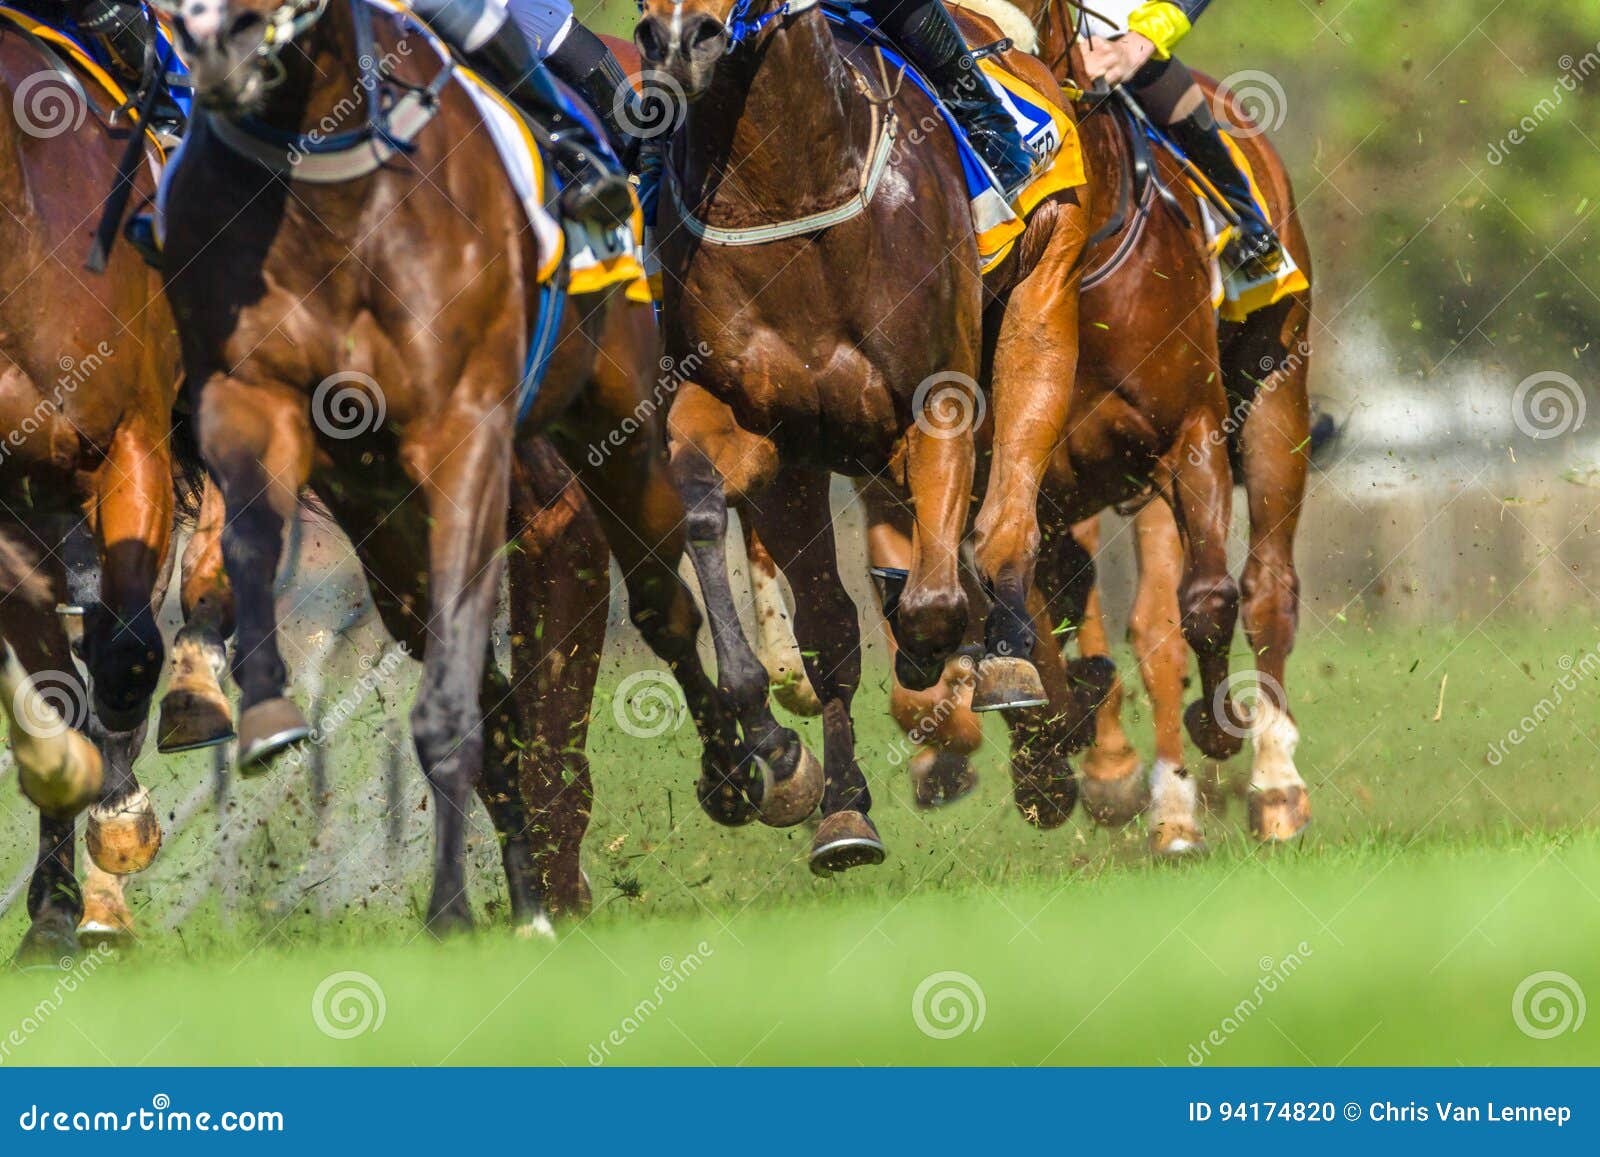 horse racing animals hoofs legs action